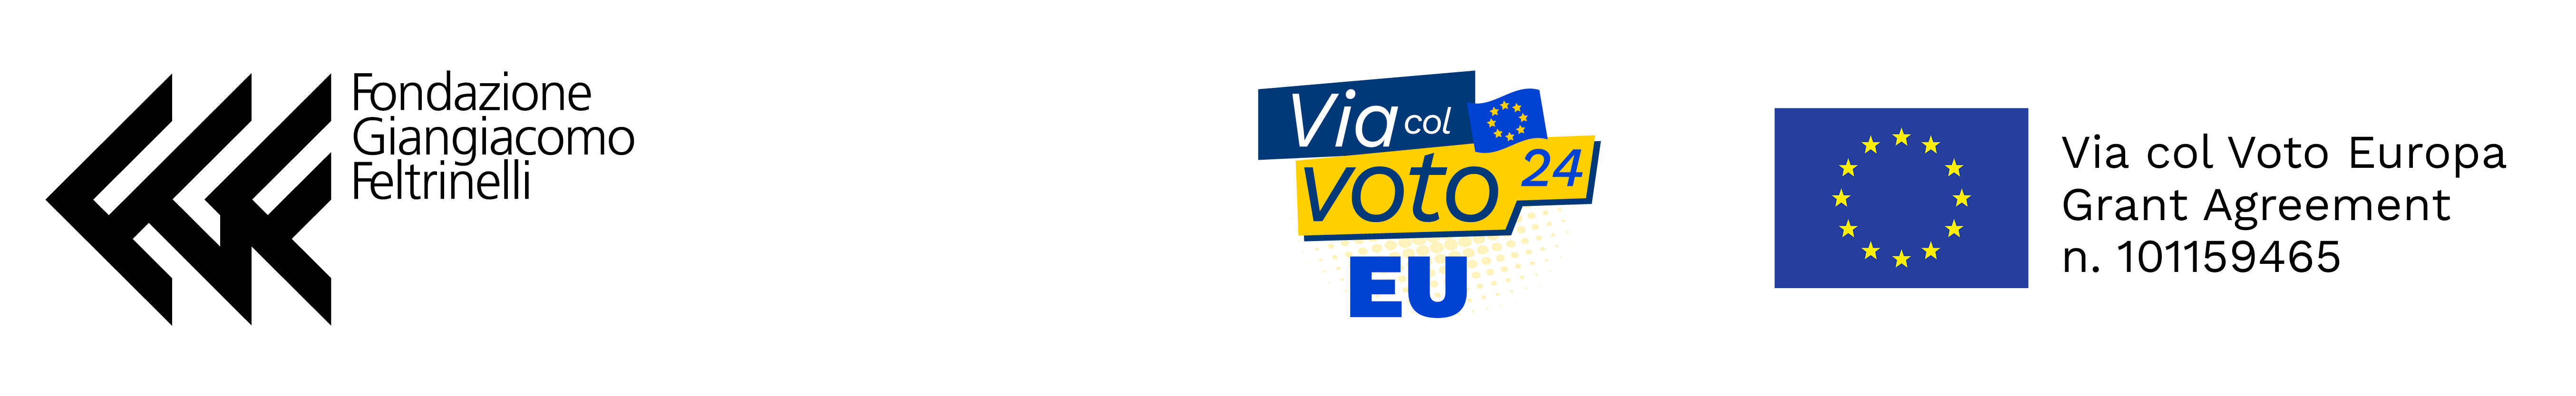 Via col voto call for volunteers (3) (1)